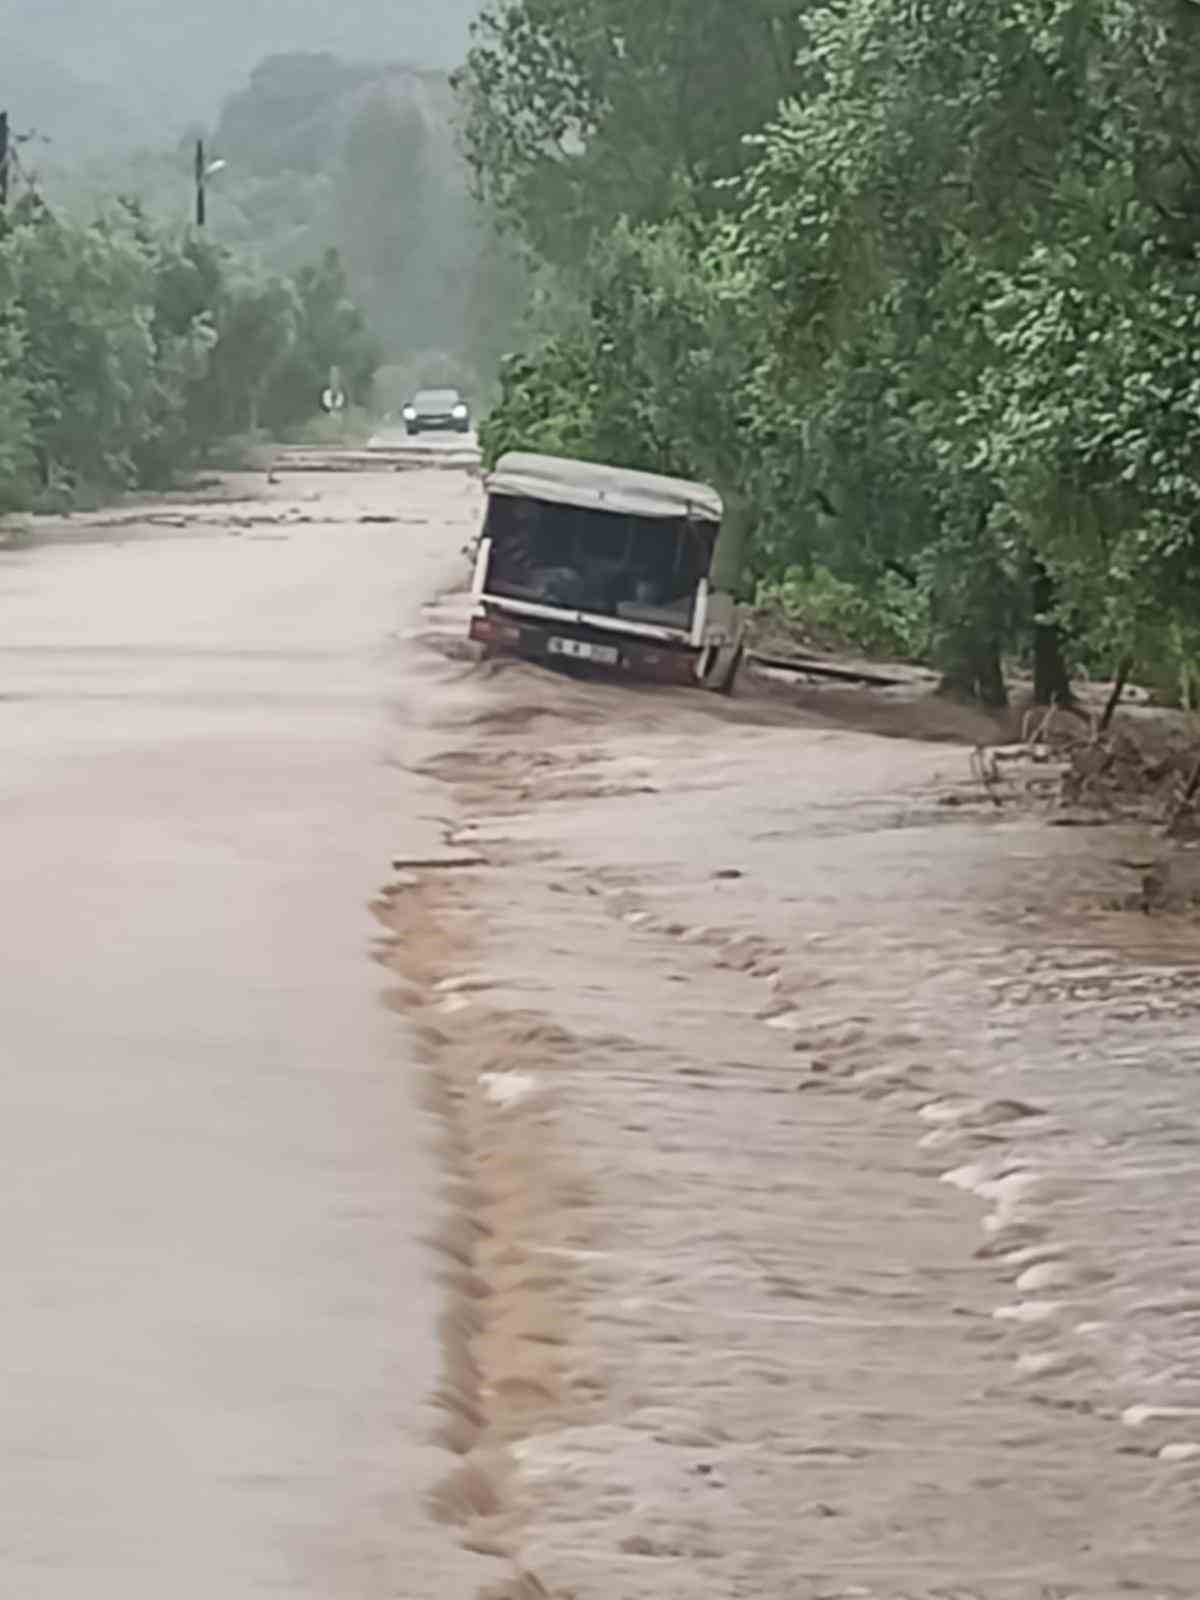 Sel suları İznik Bursa yolunu kapattı